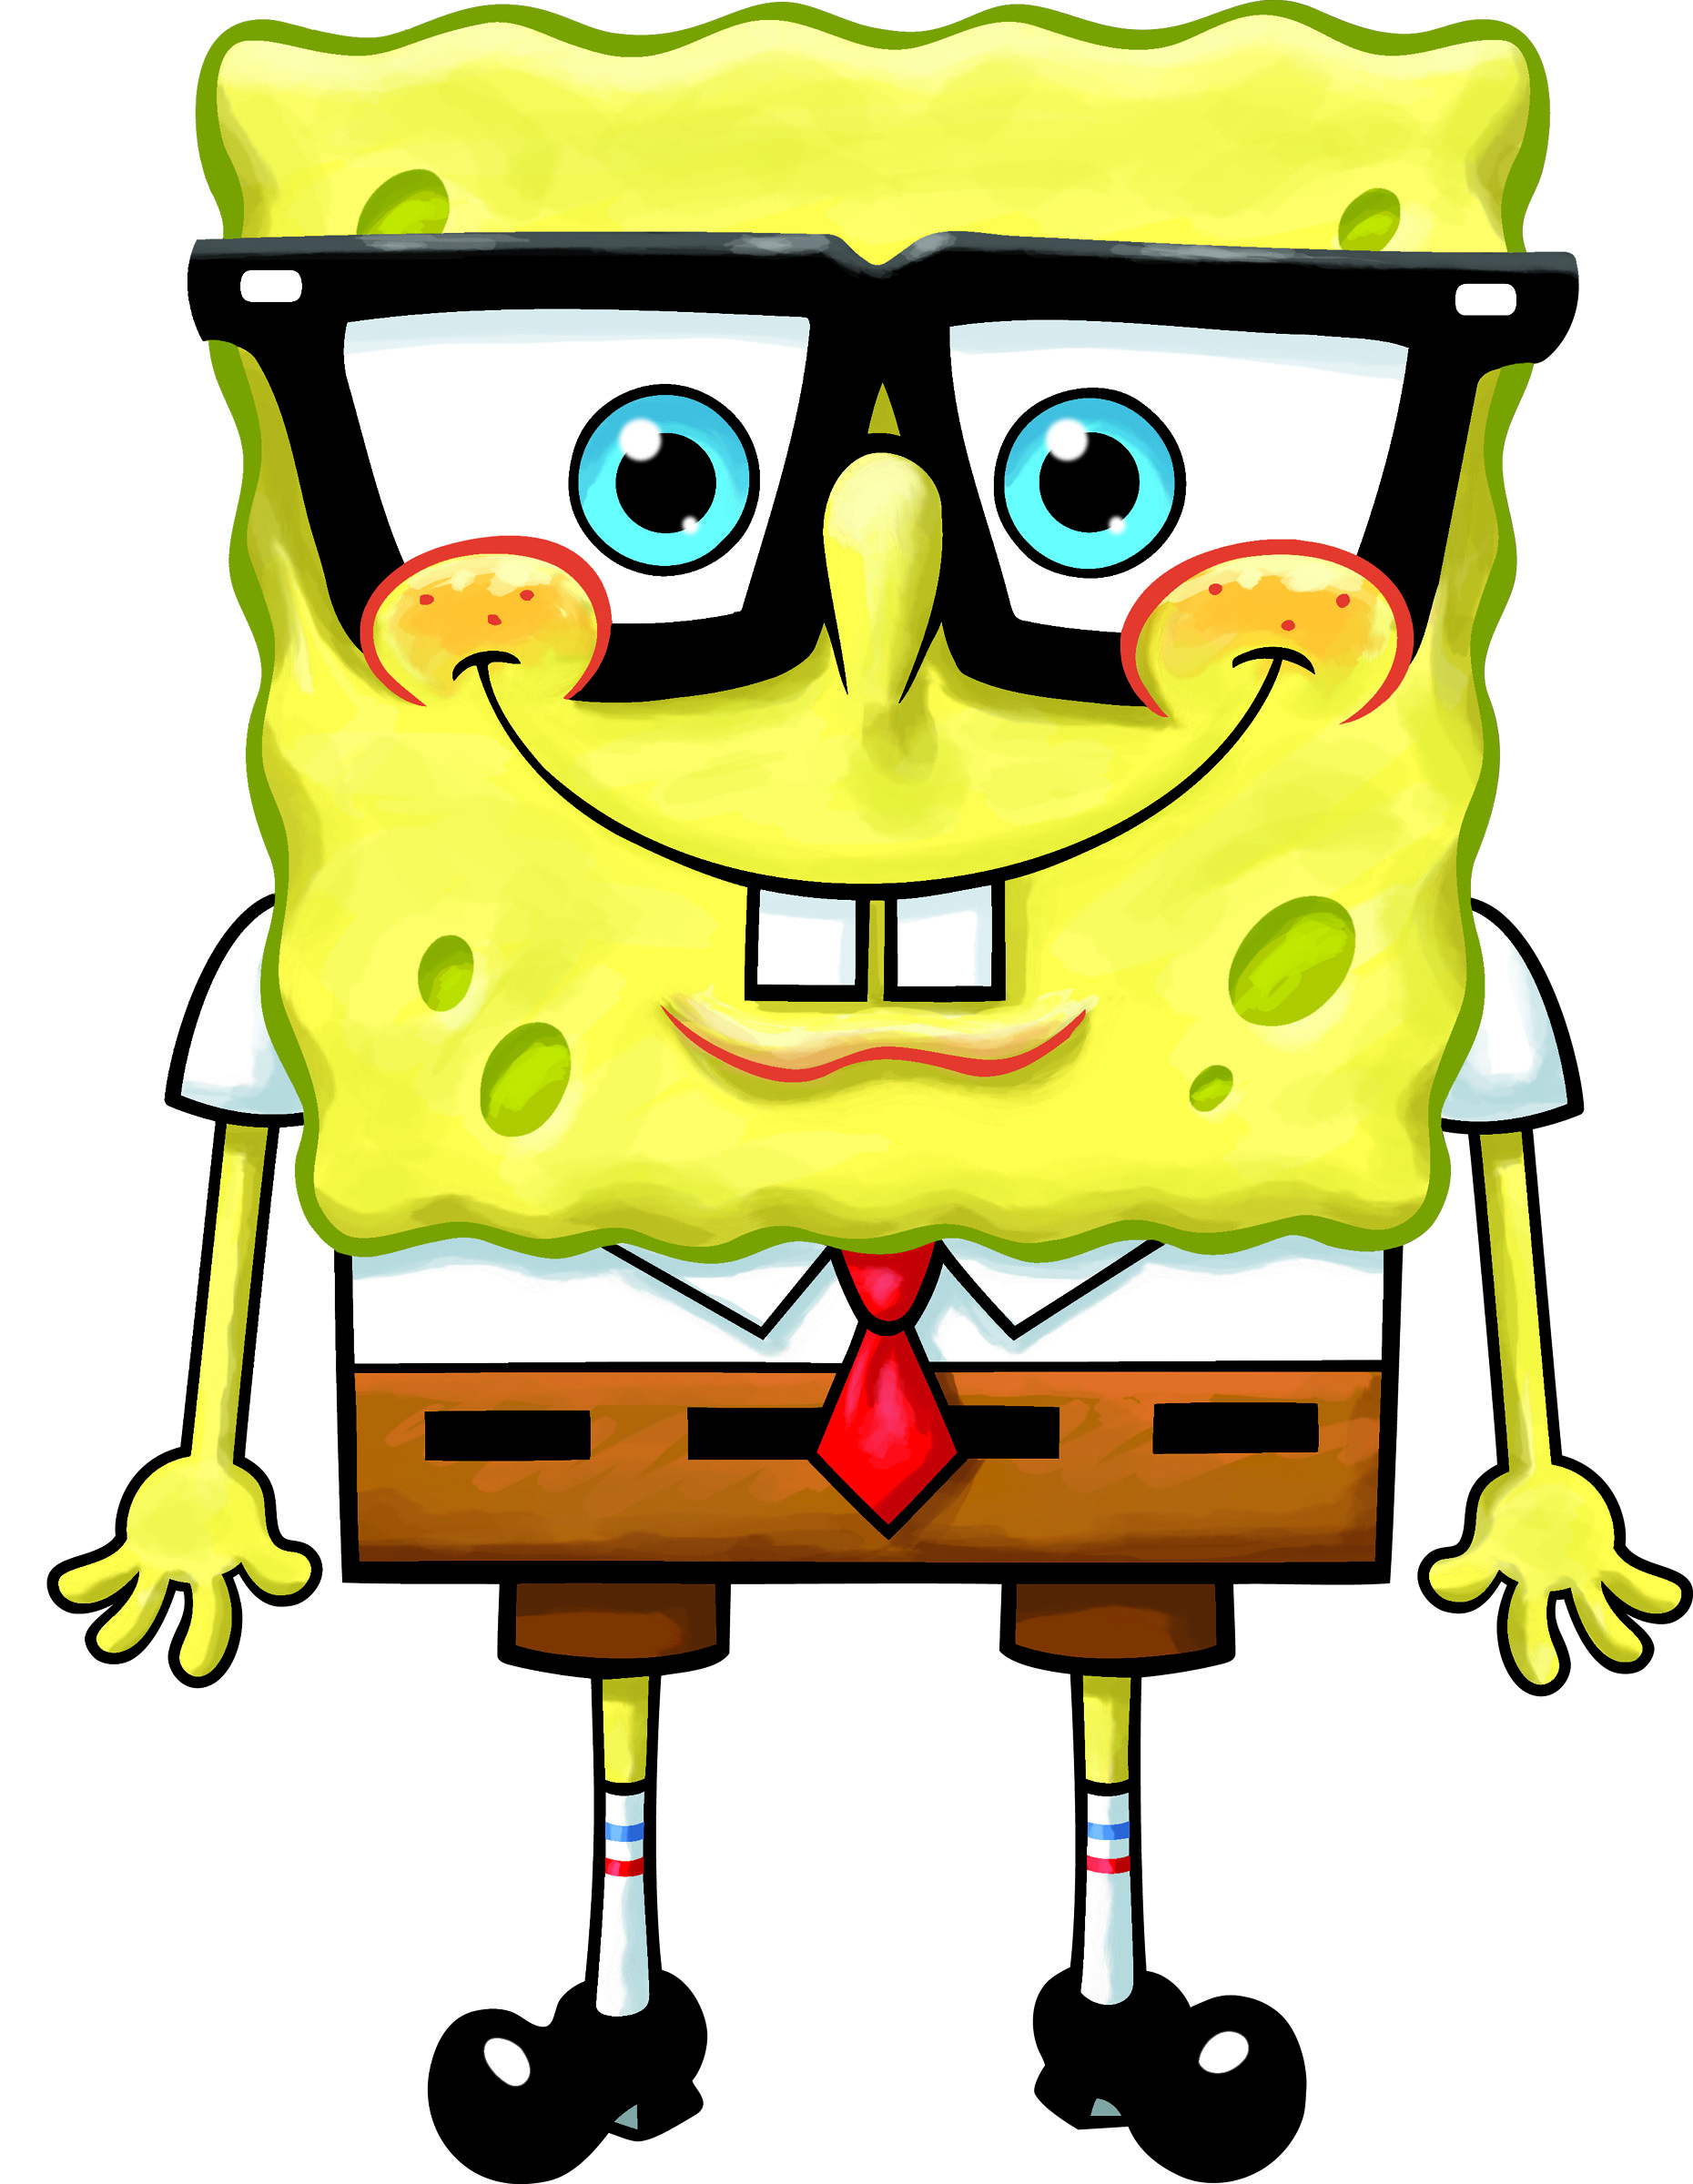 SpongeBob SquarePants (character) - The SpongeBob SquarePants Wiki